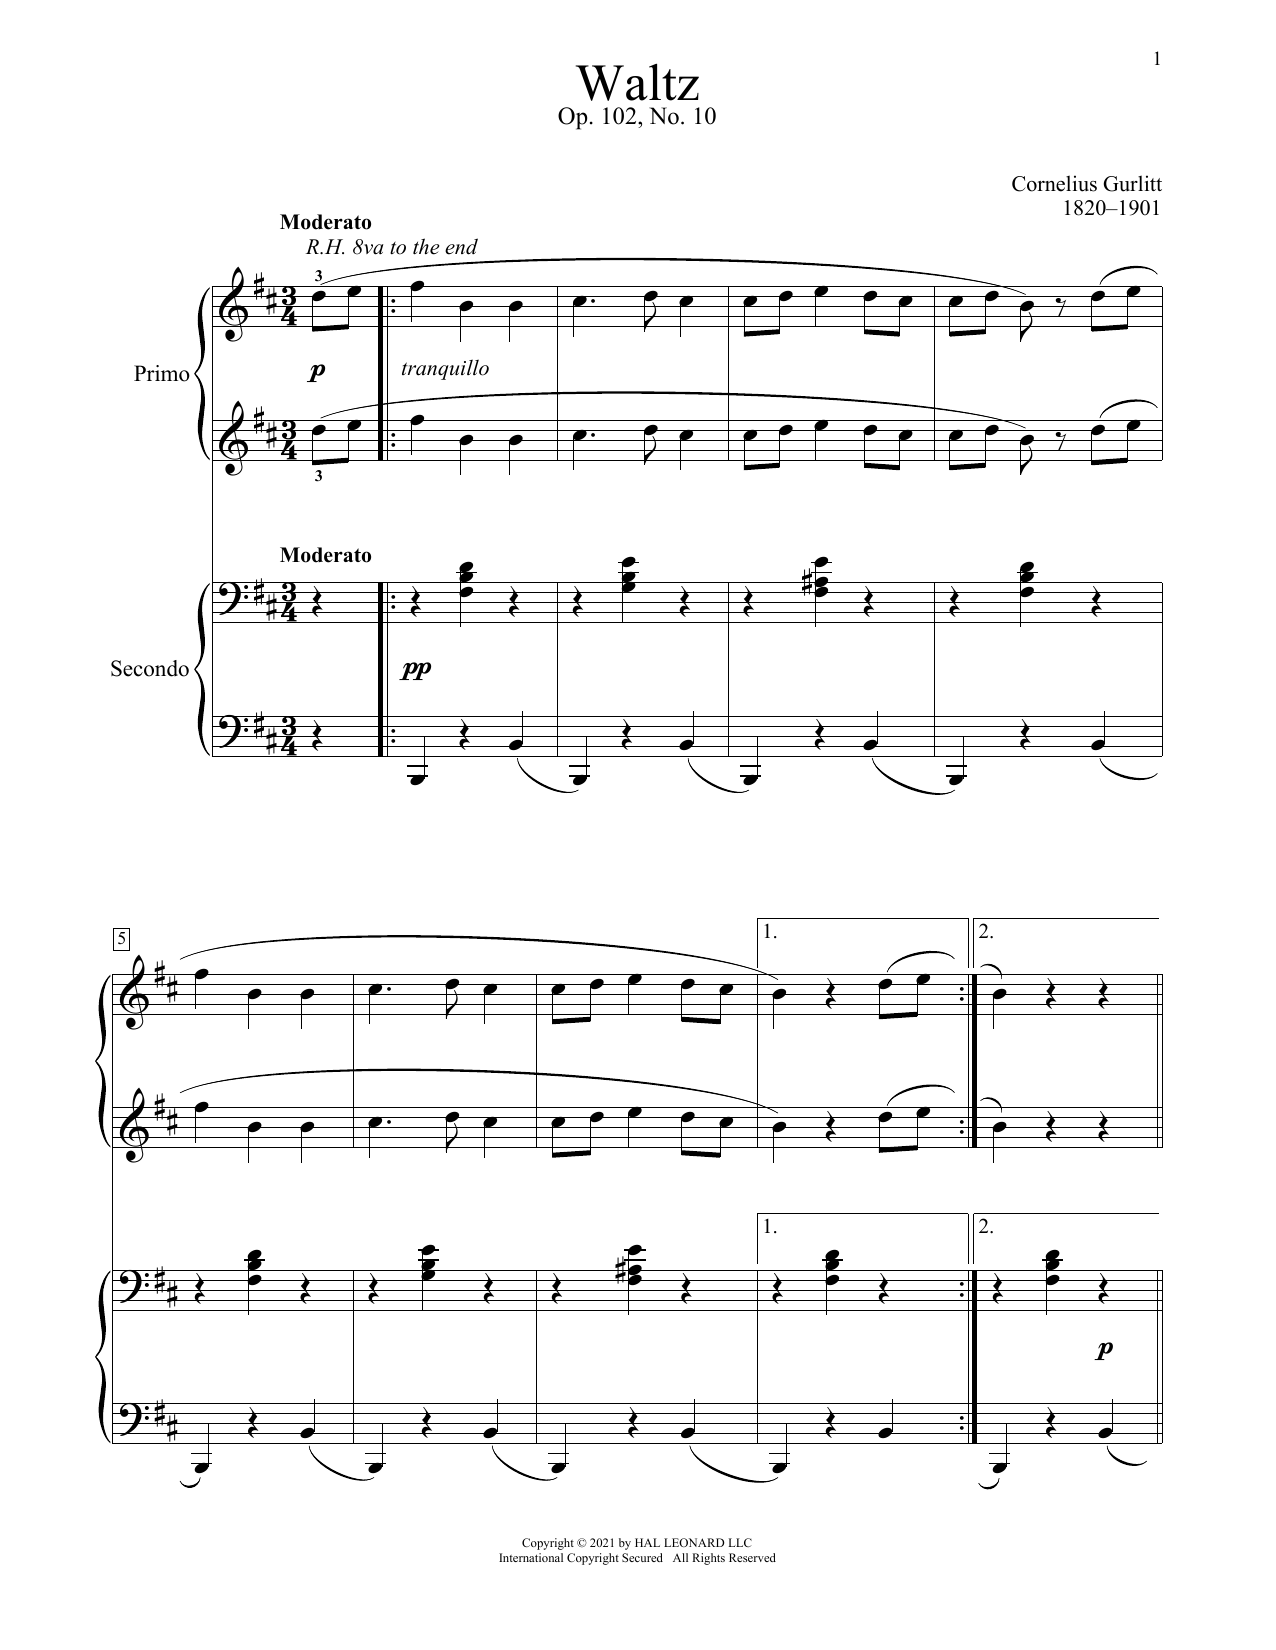 Download Cornelius Gurlitt Waltz, Op. 102, No. 10 Sheet Music and learn how to play Piano Duet PDF digital score in minutes